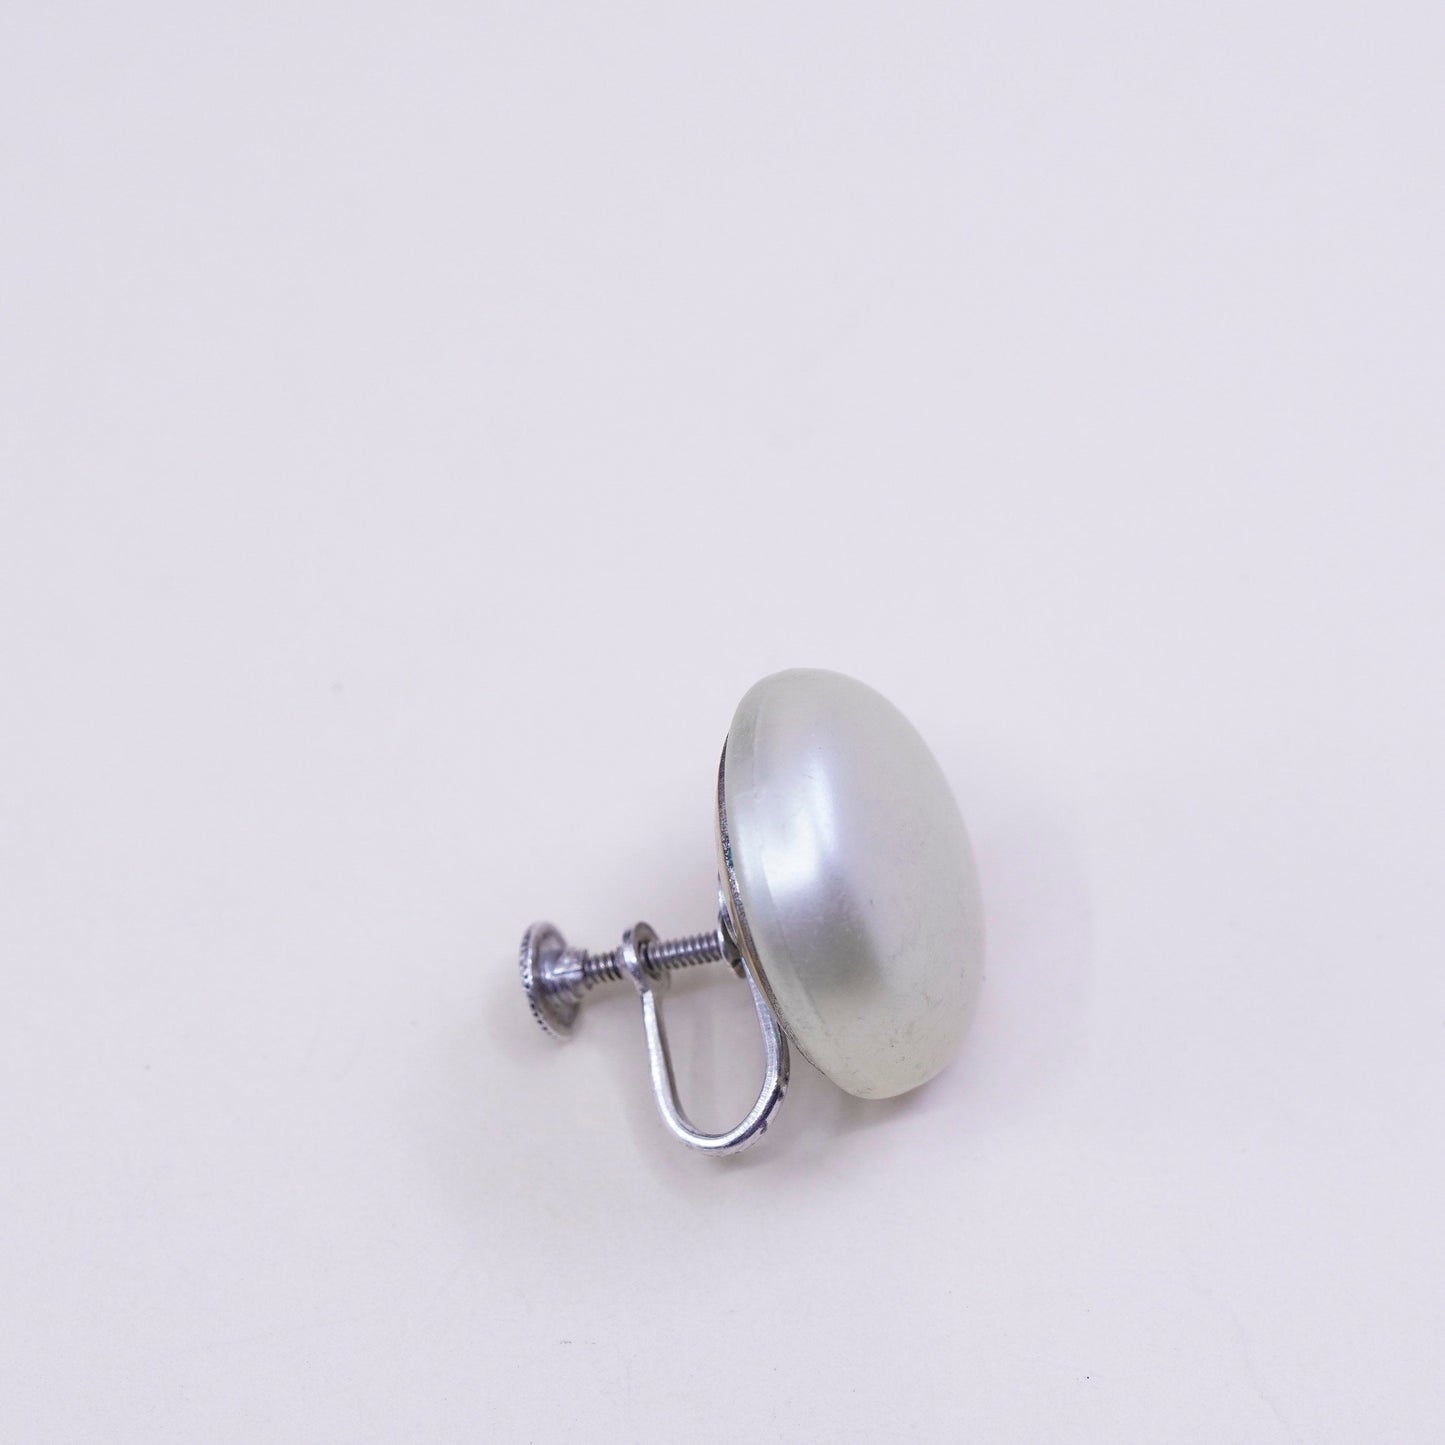 Vintage sterling 925 silver handmade earrings screw back with faux pearl, stamped sterling